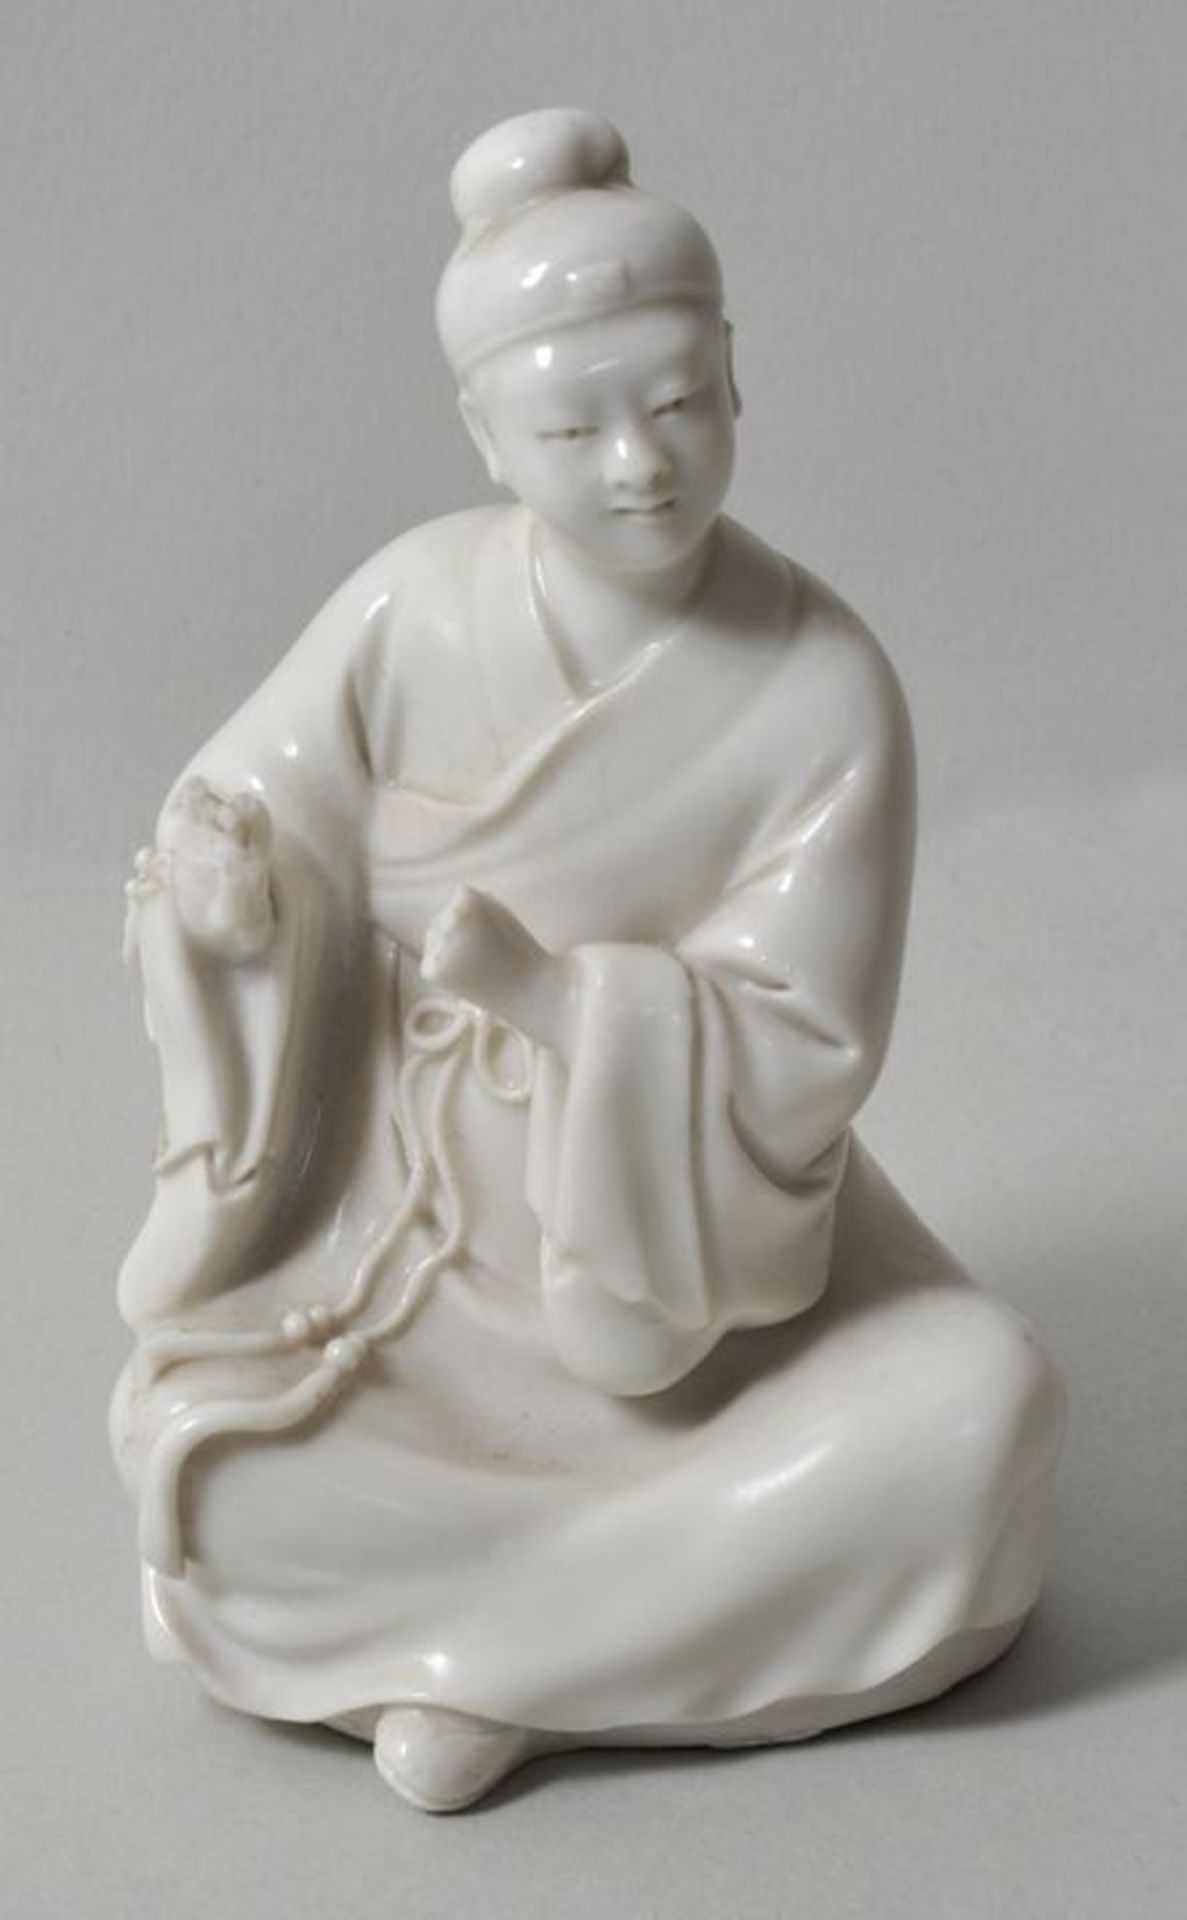 Porzellanfigur / porcelain figure